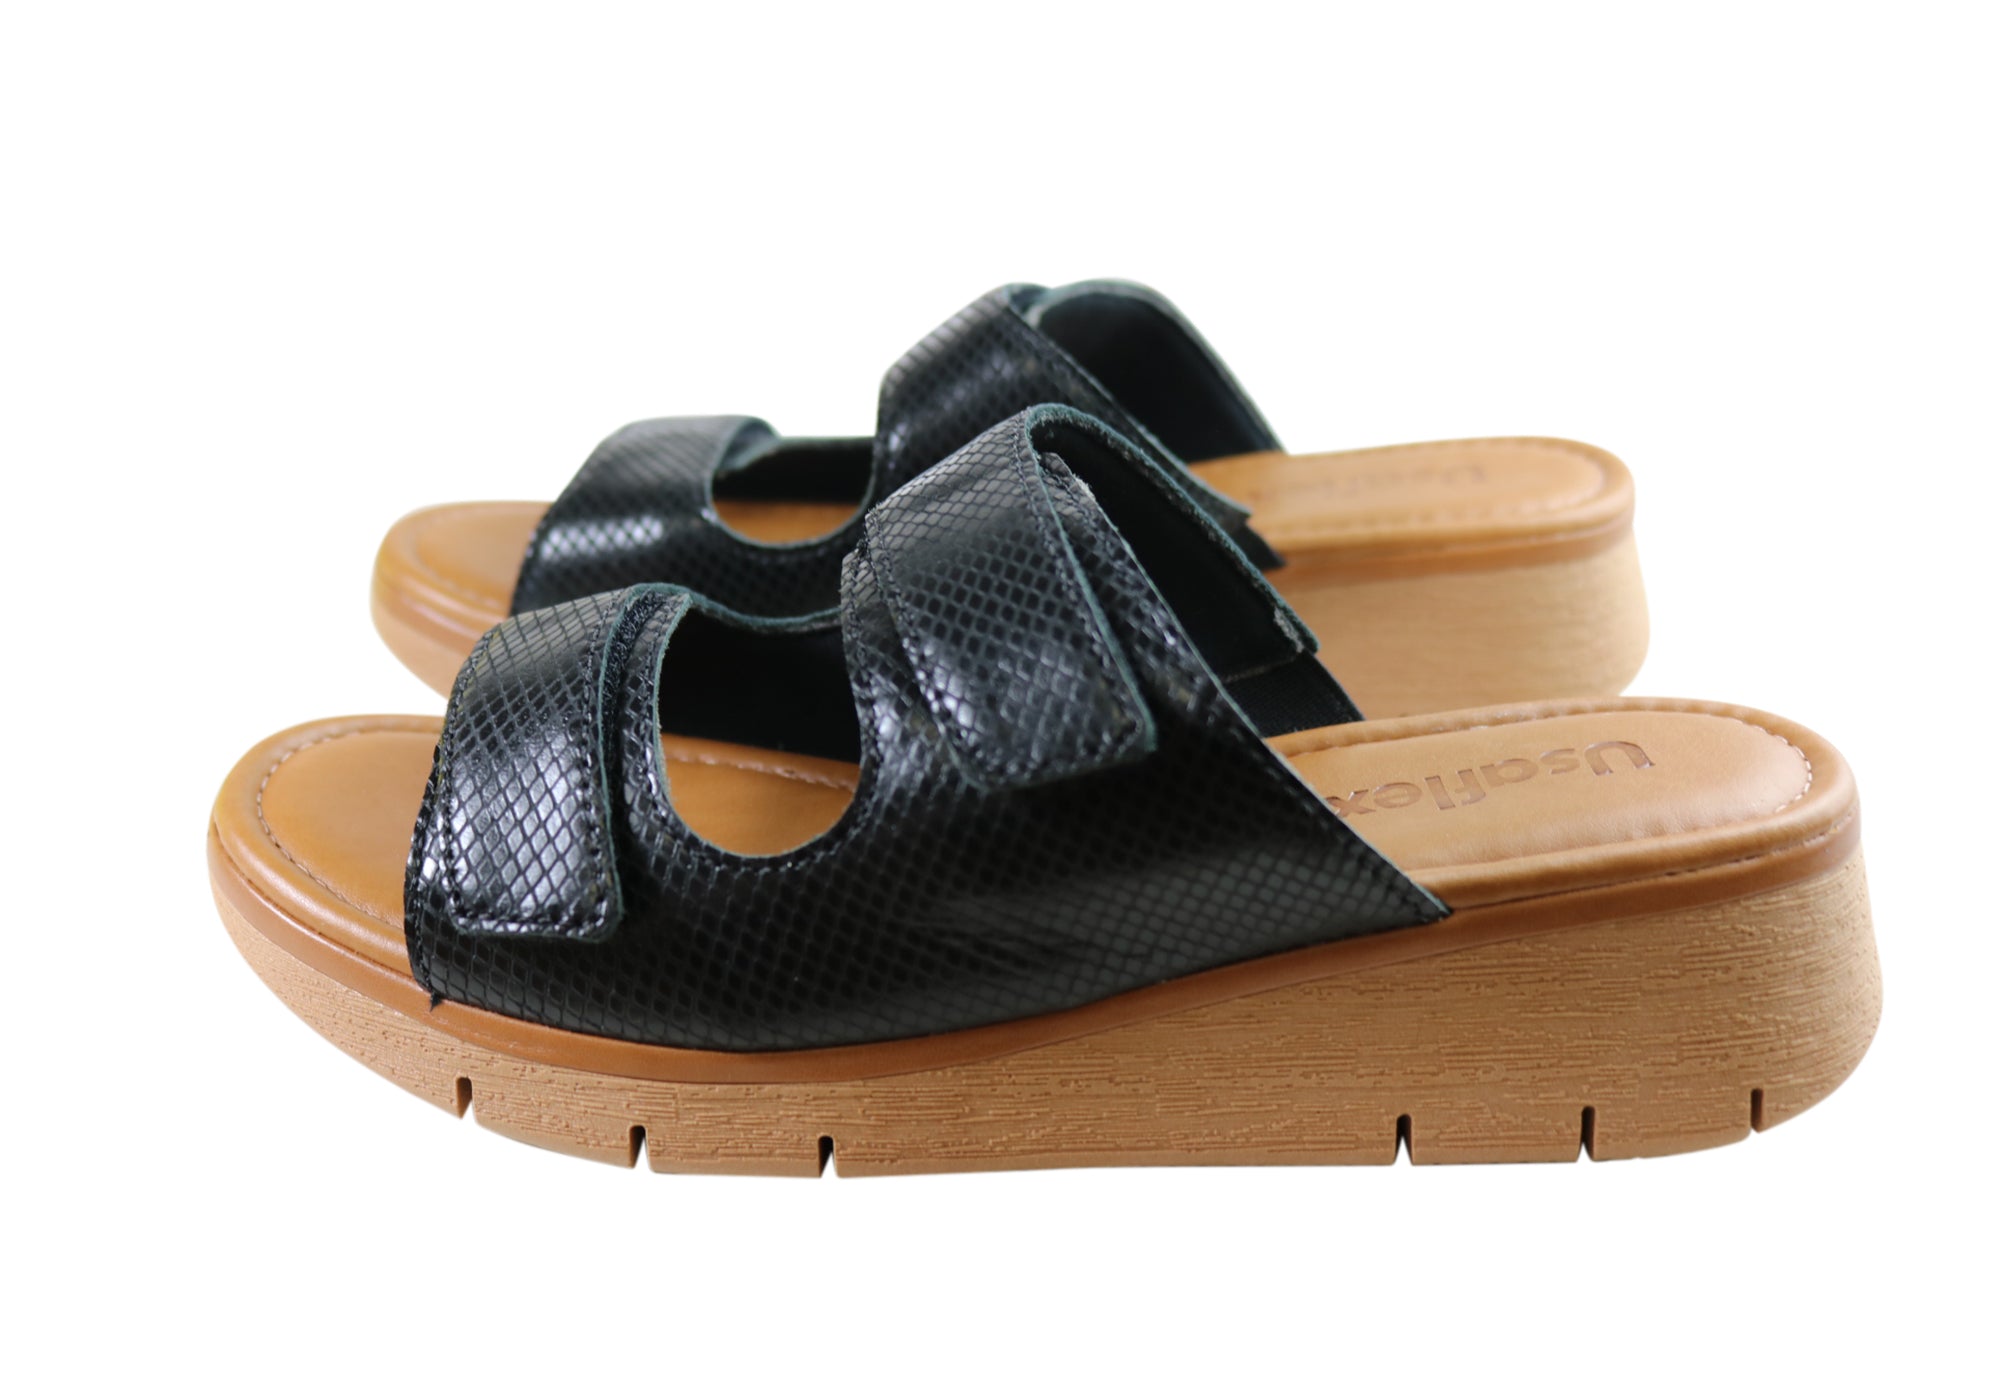 Usaflex Brooke Womens Comfort Leather Slides Sandals Made In Brazil